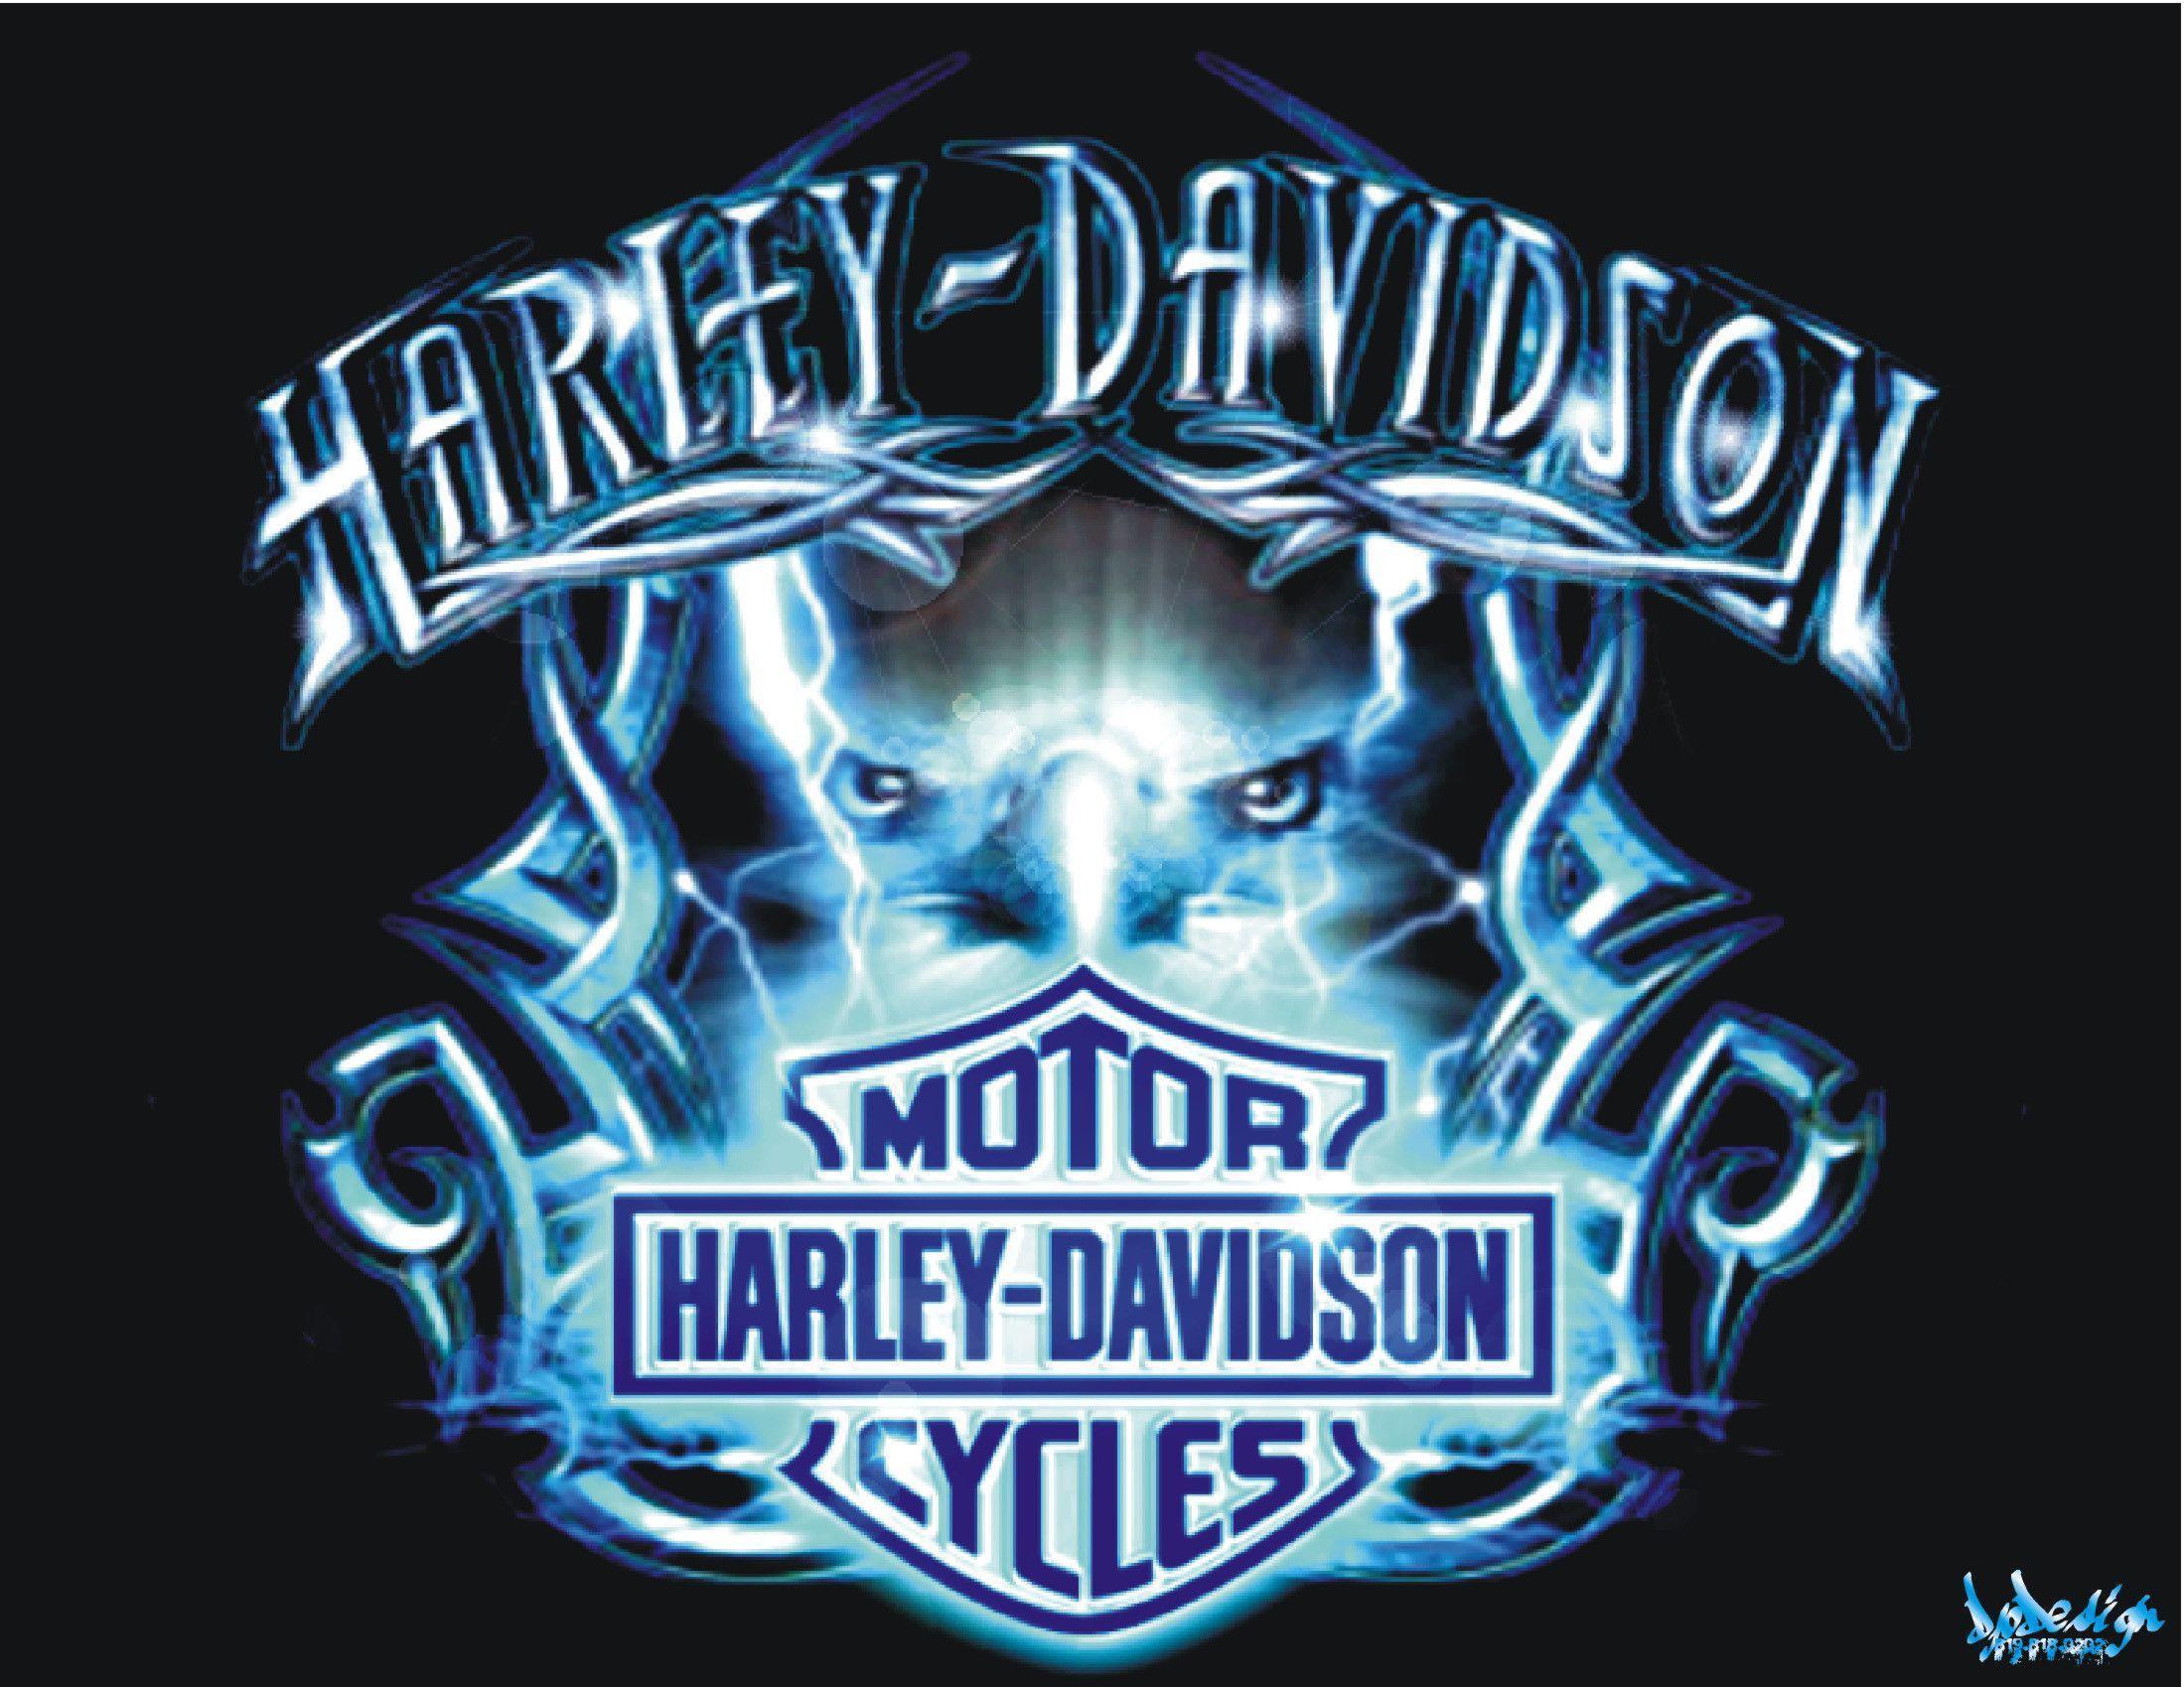 Cool Harley Davidson Logo Wallpaper Images amp Pictures   Becuo